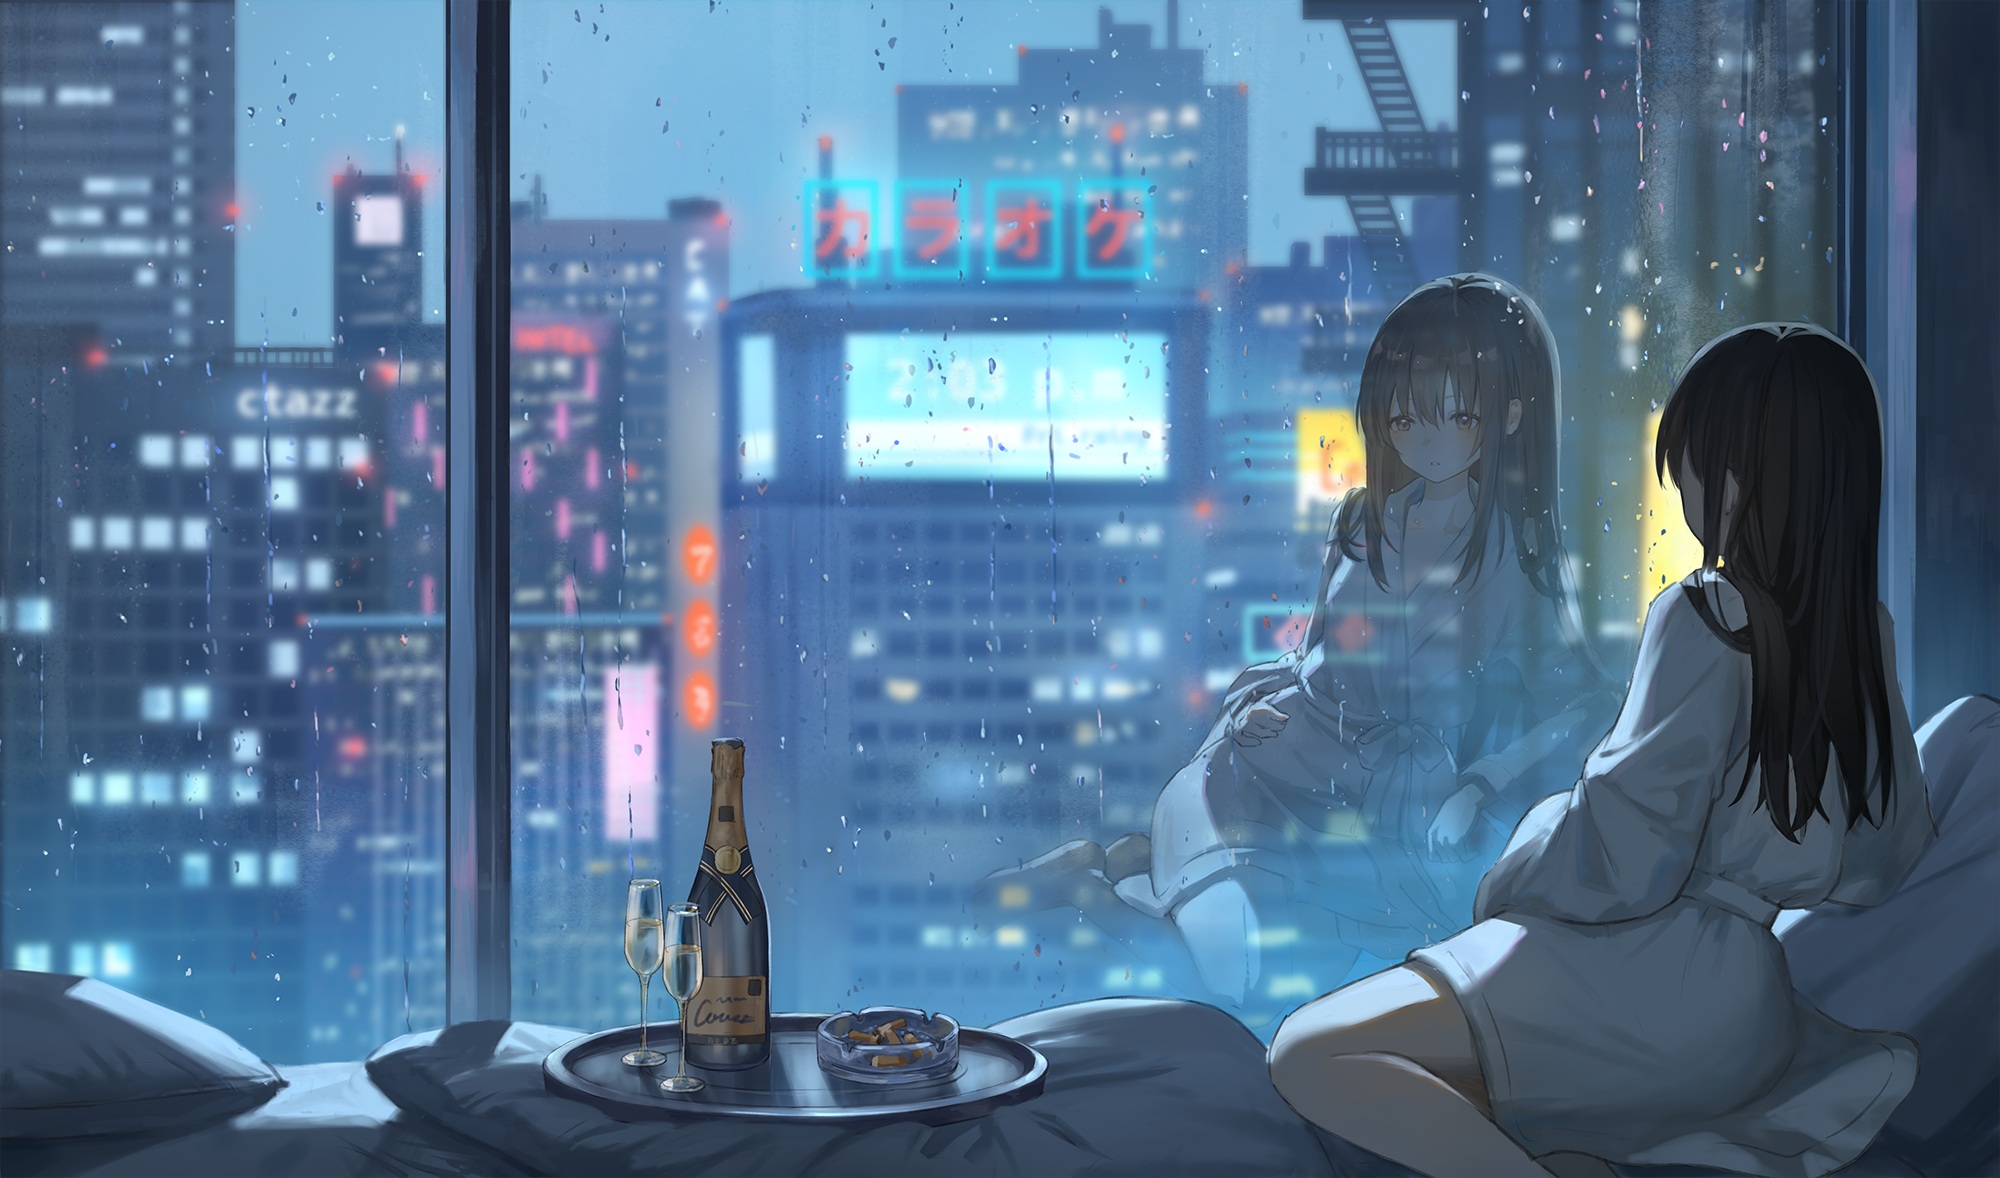 Anime Anime Girls Catzz Rain City Reflection Wallpaper -  Resolution:2000x1178 - ID:1355559 